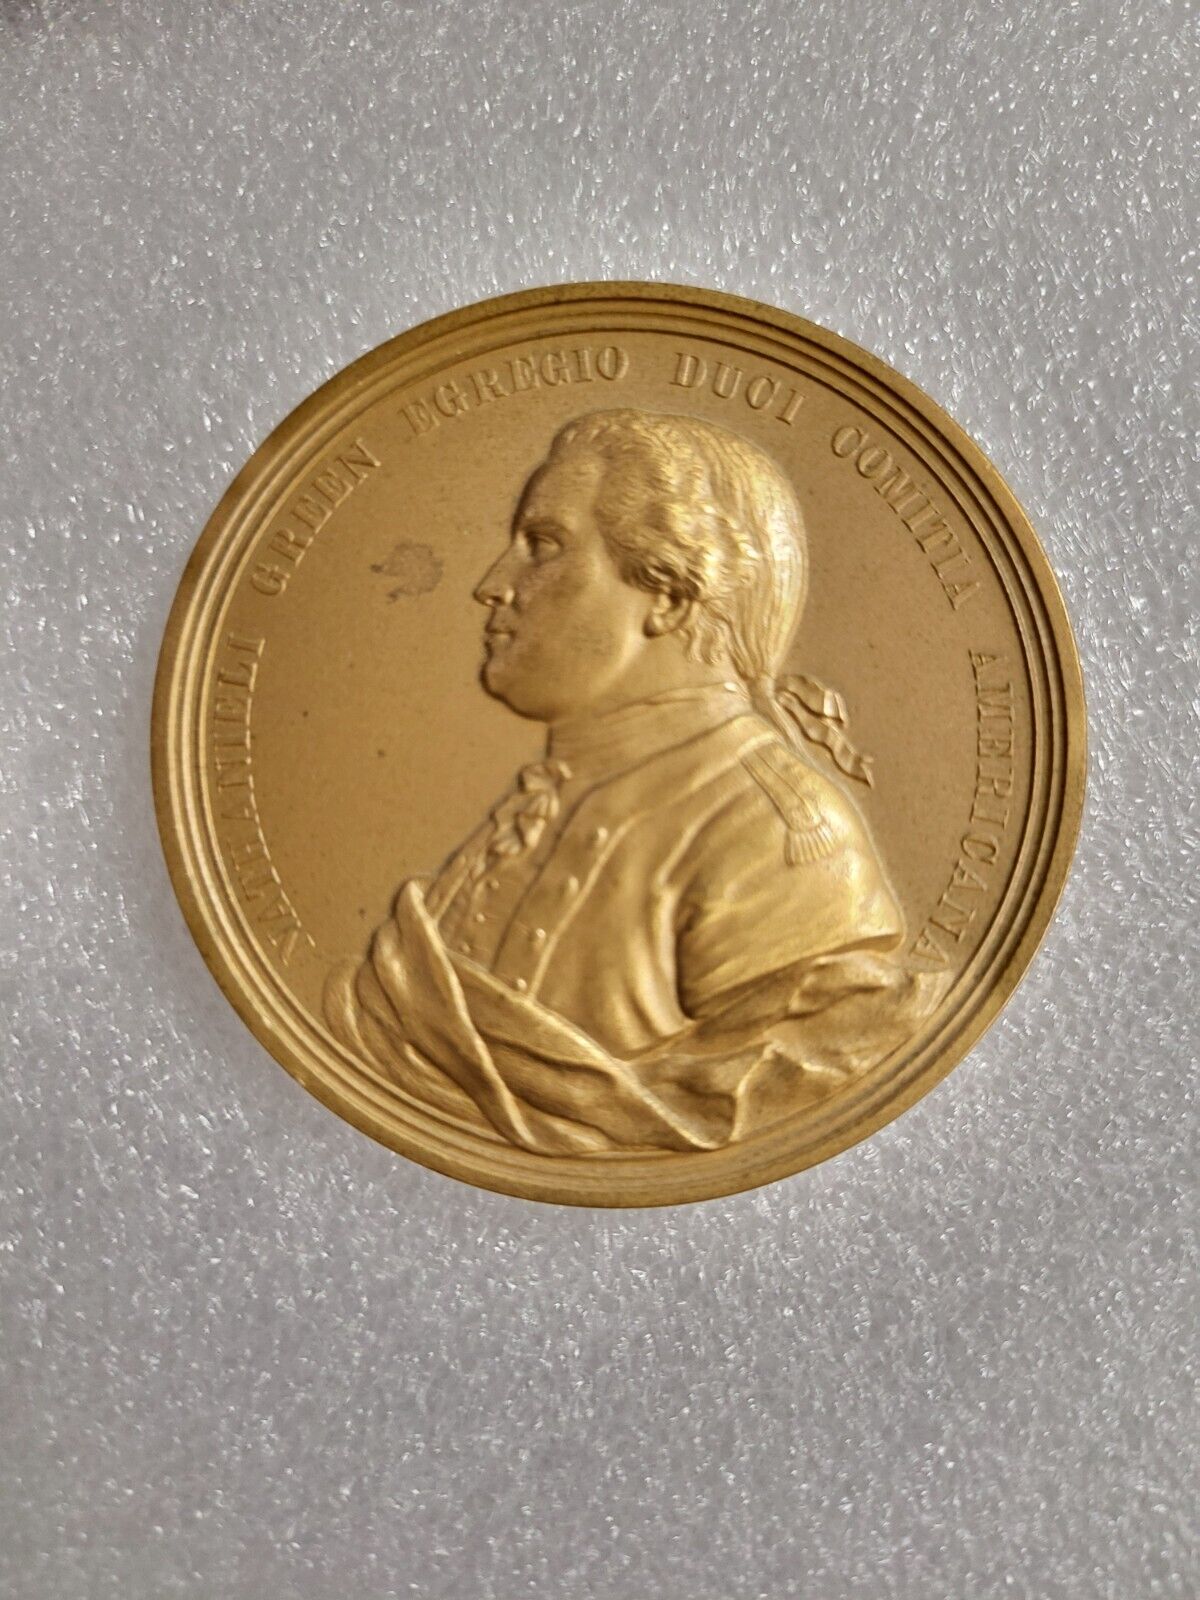 Nathanieli Green Egregio Duci US Comitia Americana US Bronze Medal   96 grams